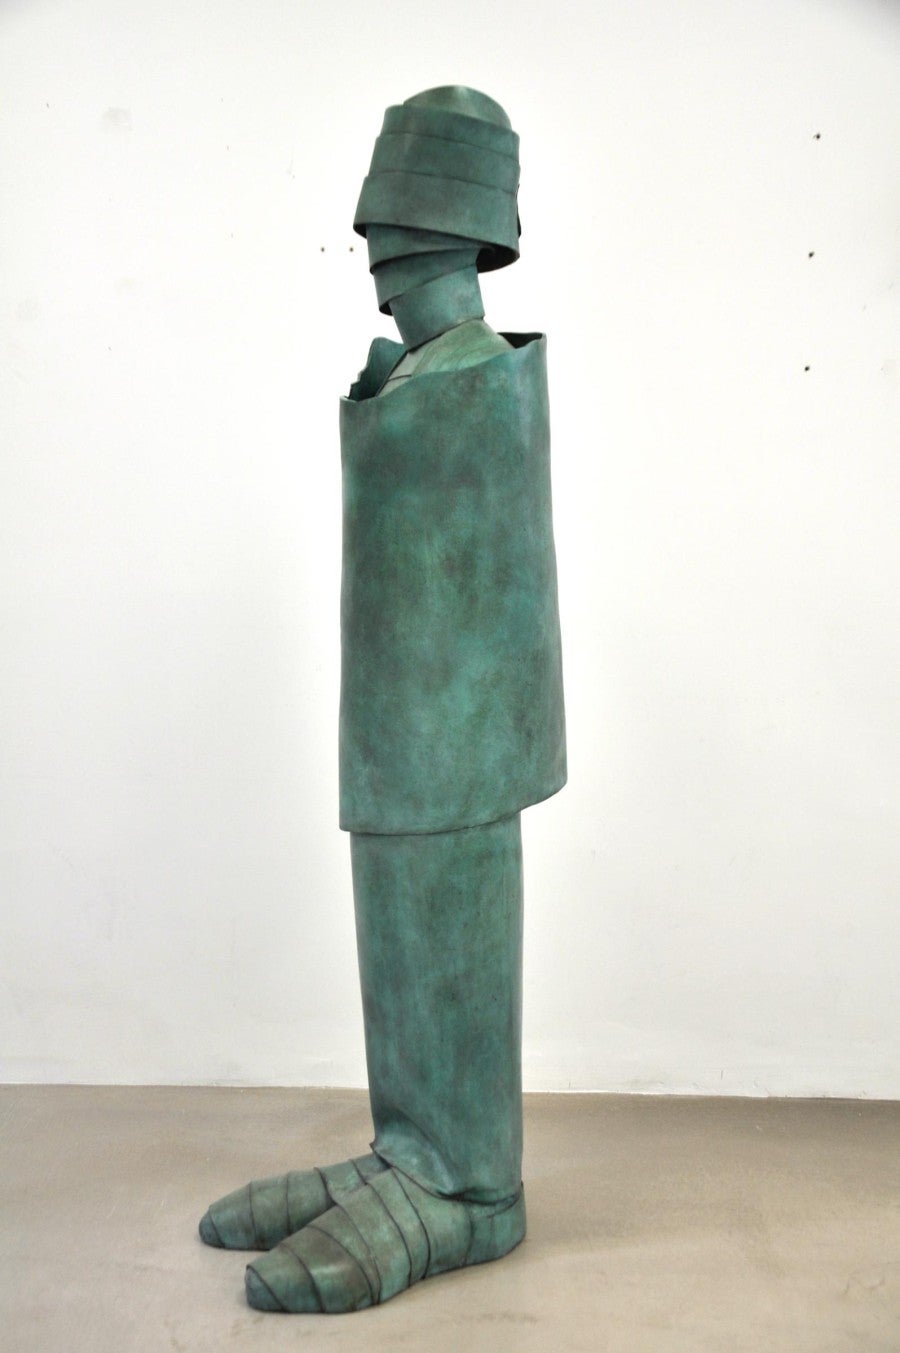 Katinka Bock, Amnésie (détail), 2022, bronze, céramique, cuir, édition 1/3. Photo: Katinka Bock. Courtesy Galerie Jocelyn Wolff